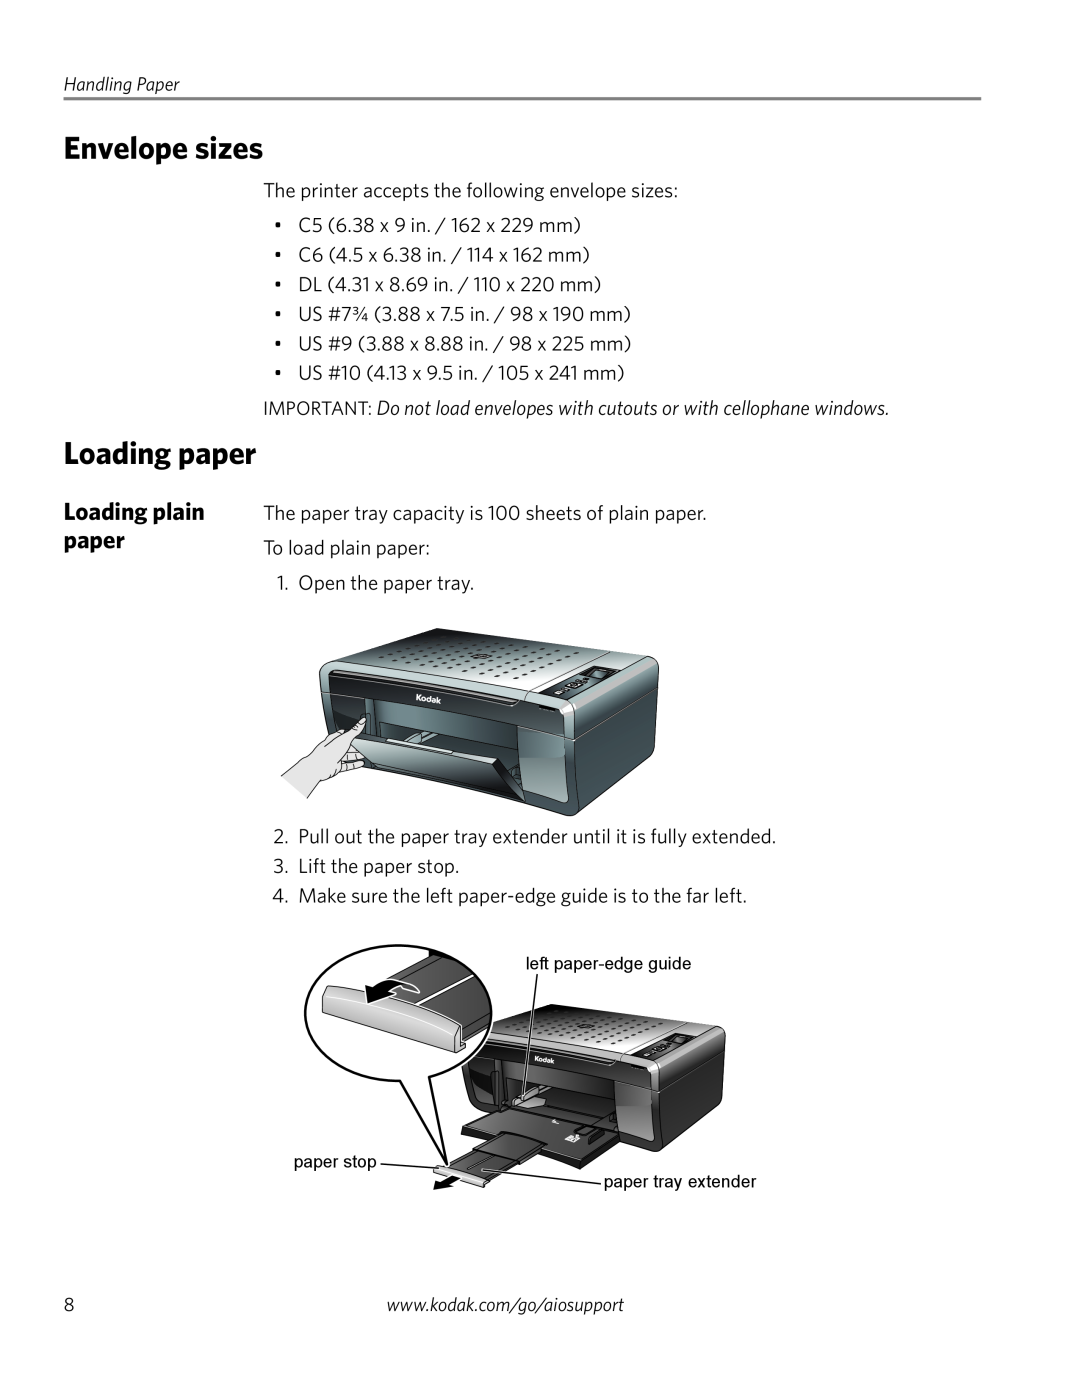 Kodak ESP 3250, ESP 3260, ESP 3200 Series manual Envelope sizes, Loading paper, Loading plain paper 